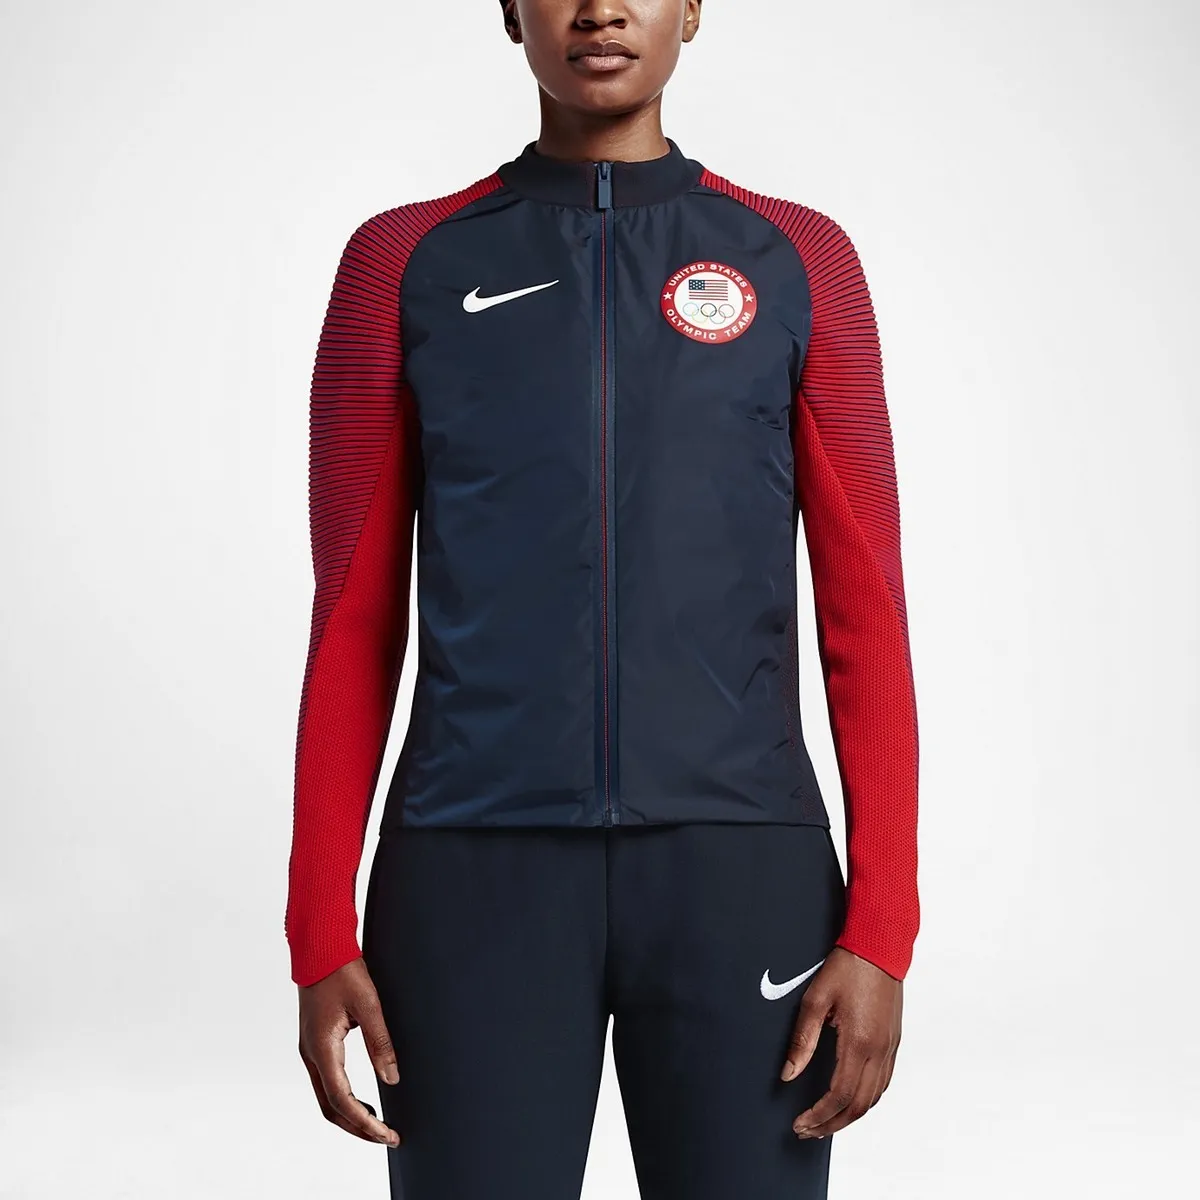 NWT Nike Sportswear Team USA Dynamic Reveal Jacket S L XL 2016